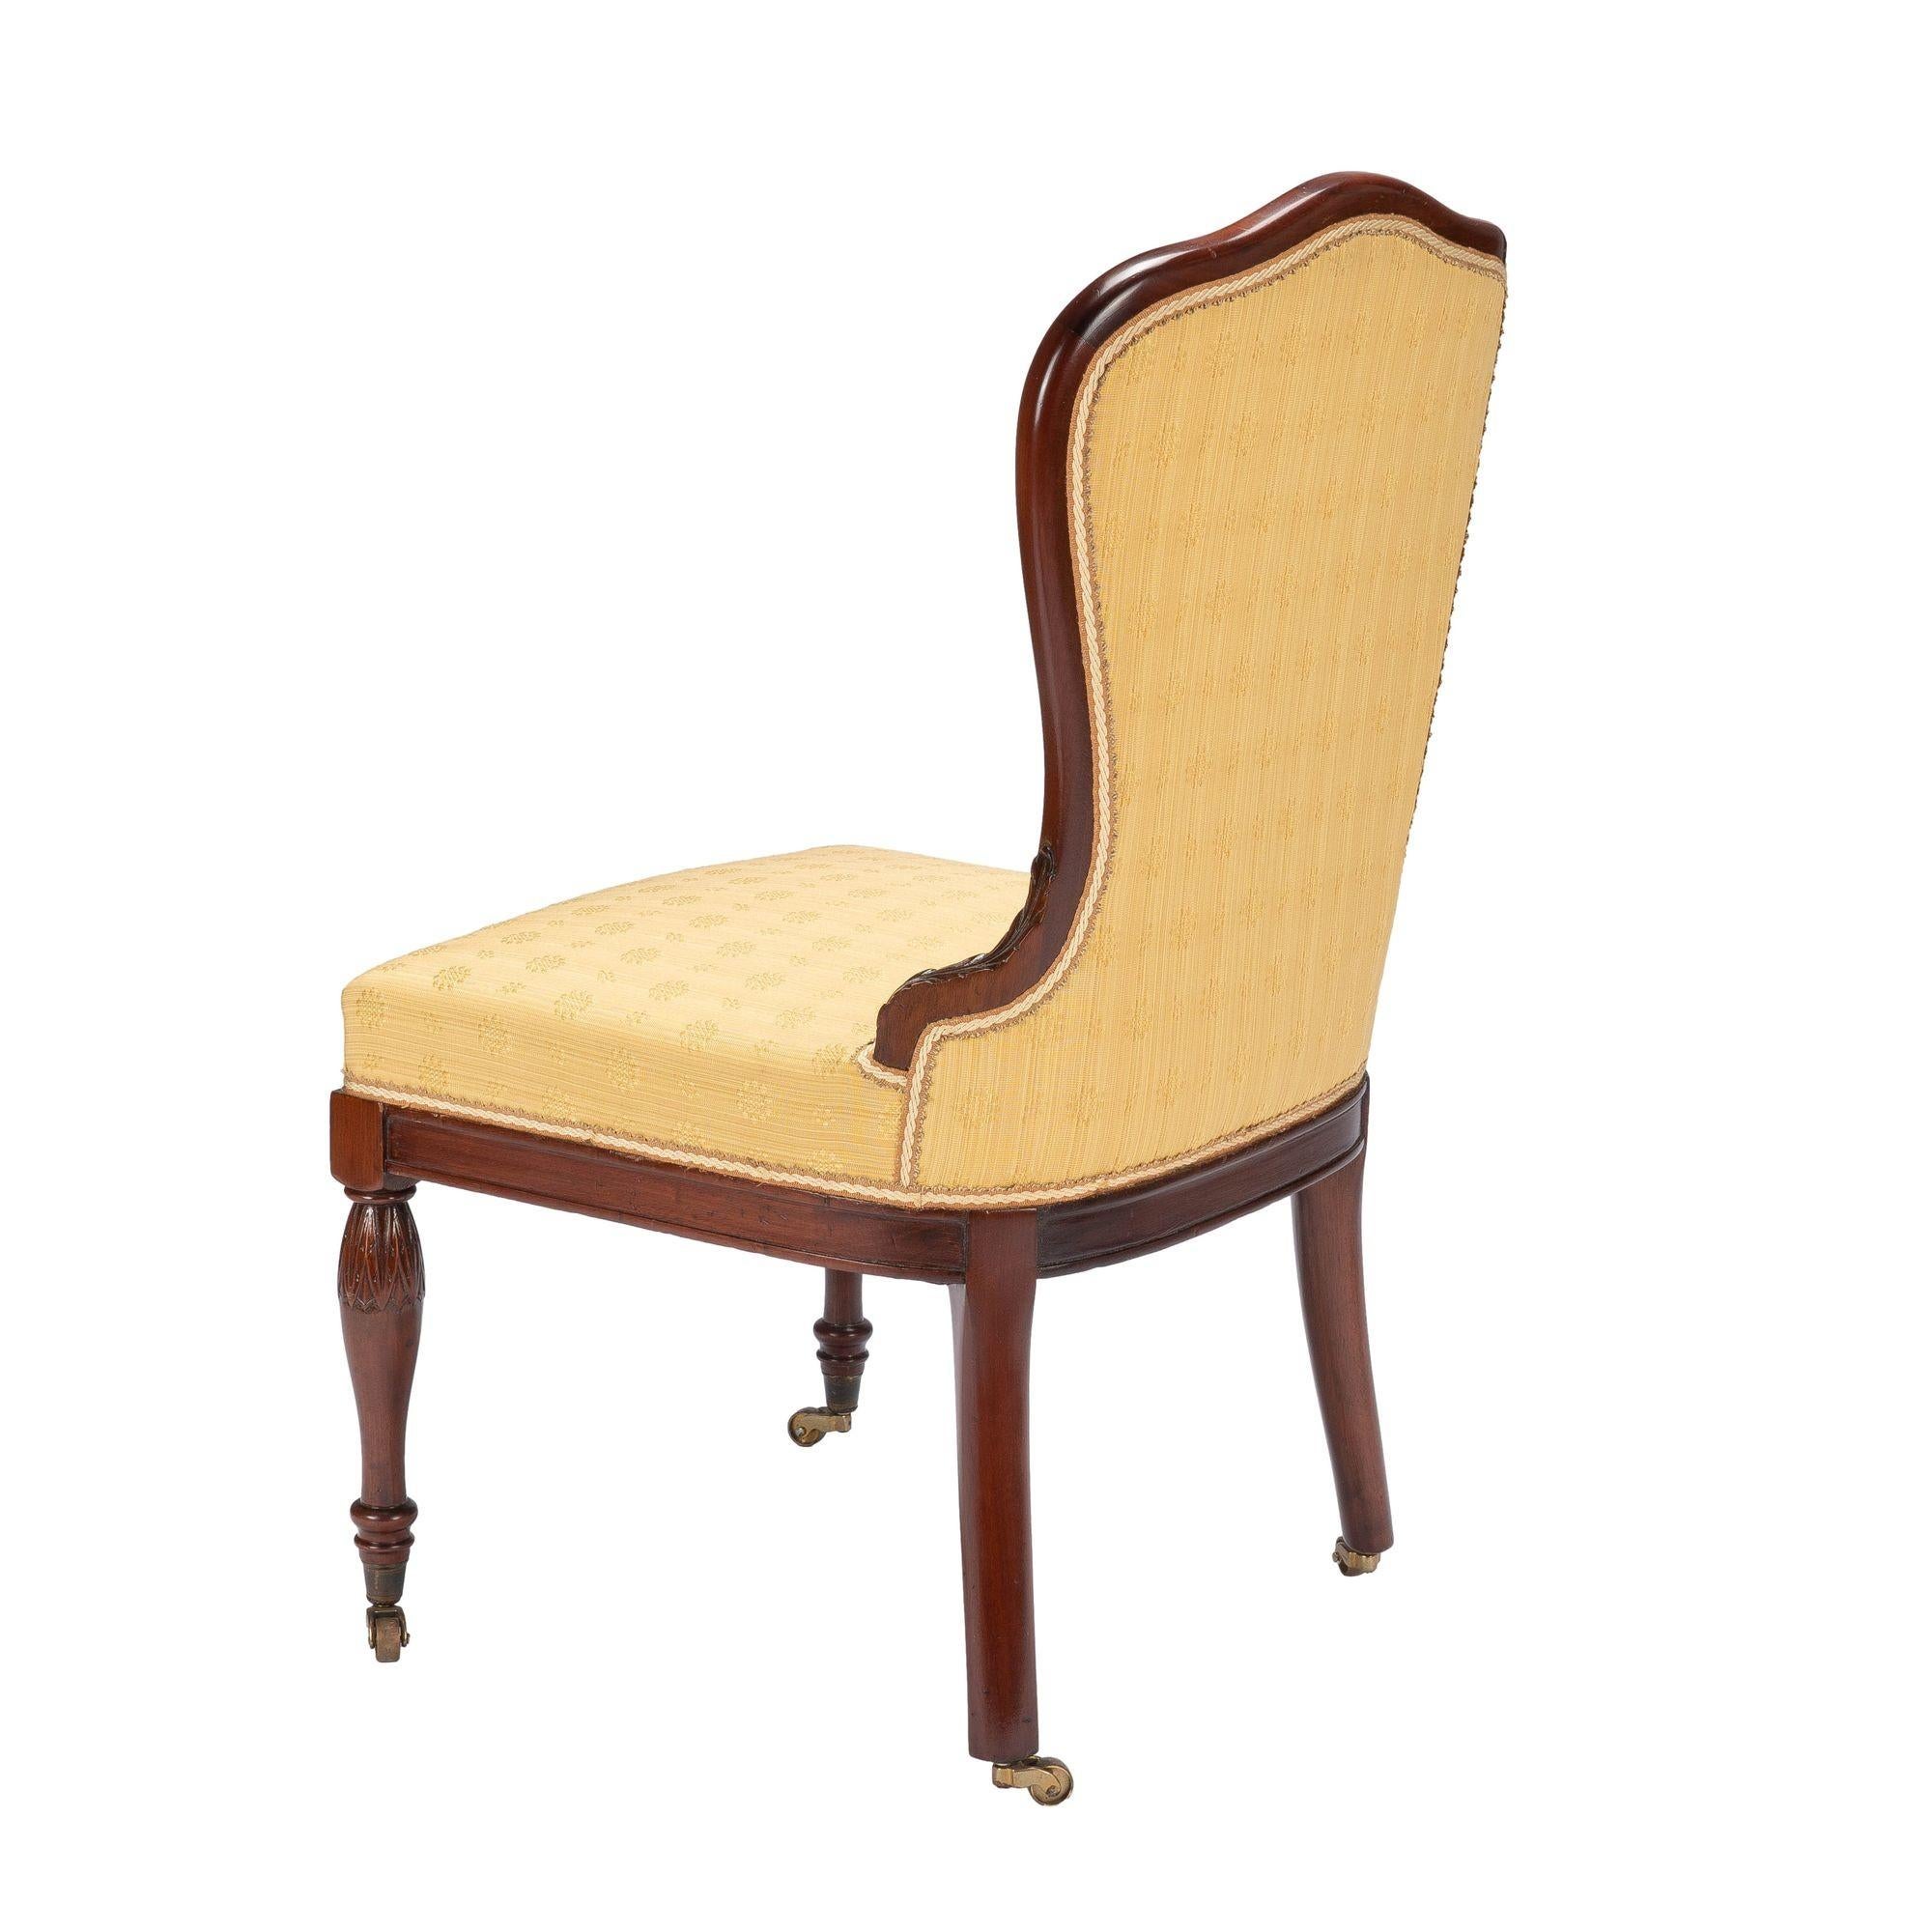 American Baltimore Louis XVI Revival Upholstered Slipper Chair, '1850-75' For Sale